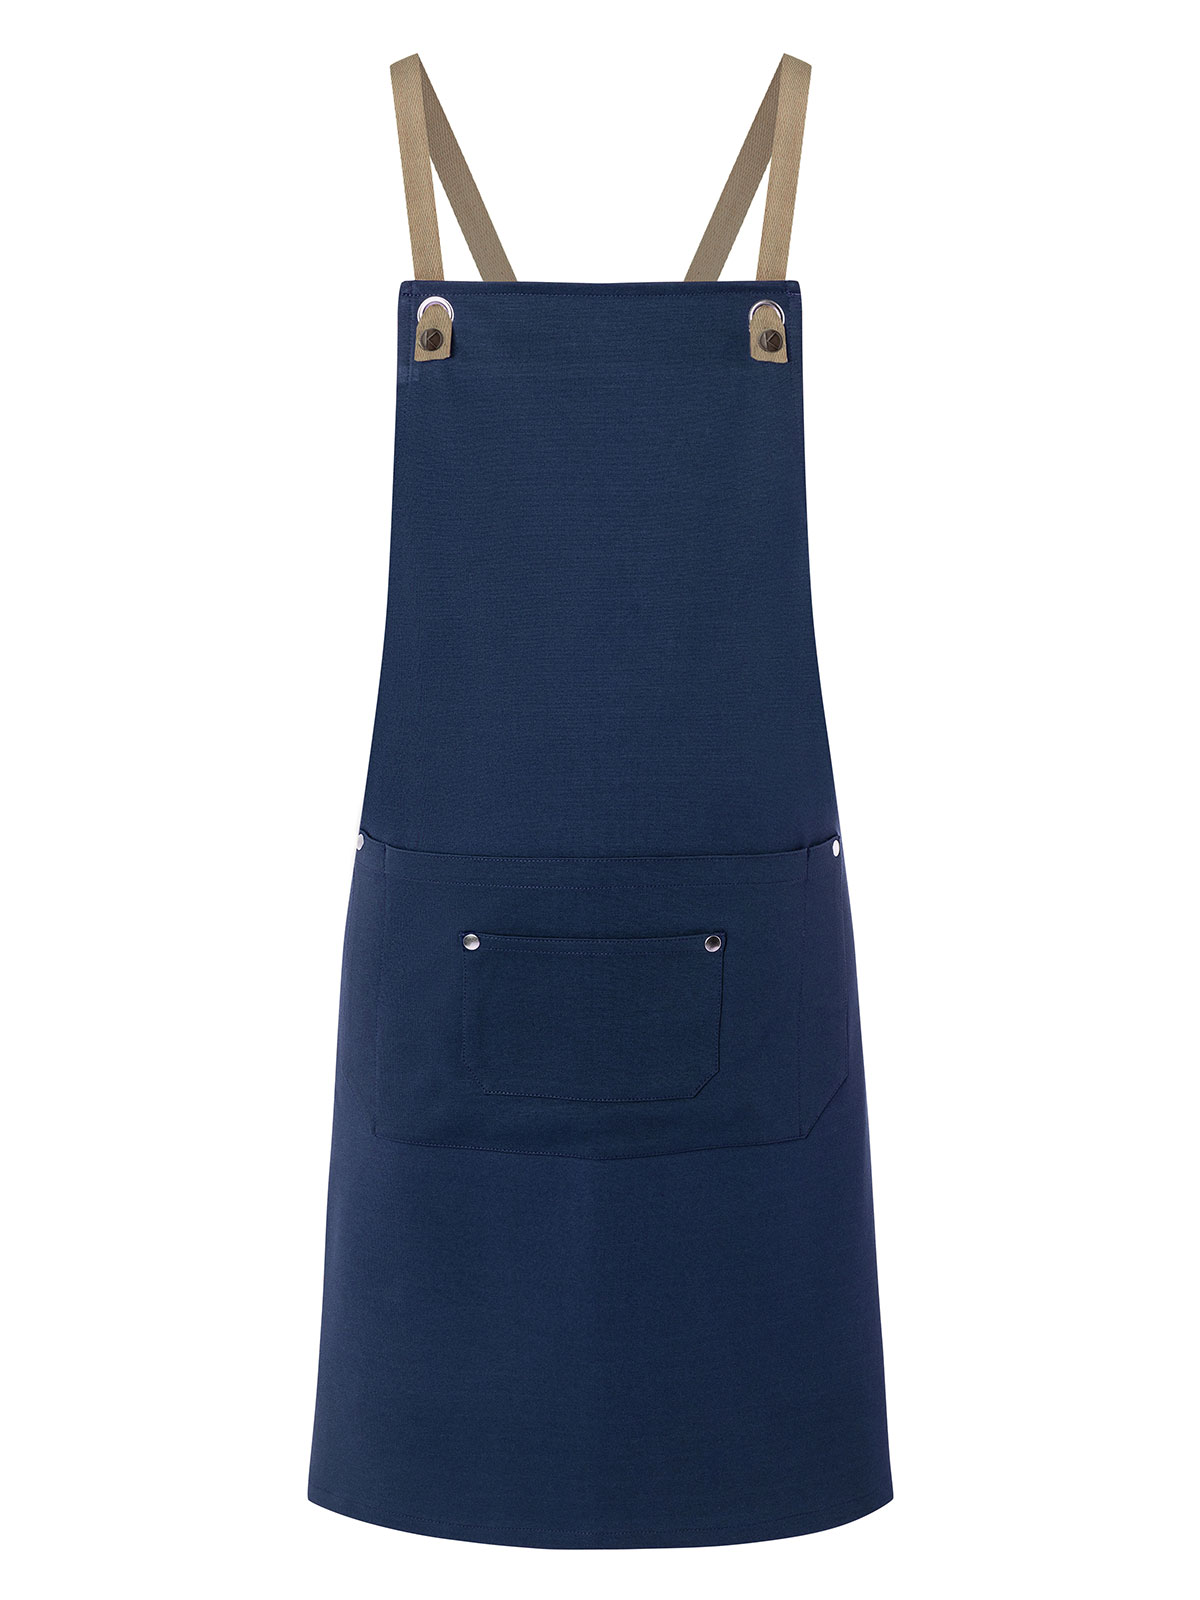 bib-apron-with-crossed-ribbons-and-big-pocket-steel-blue.webp